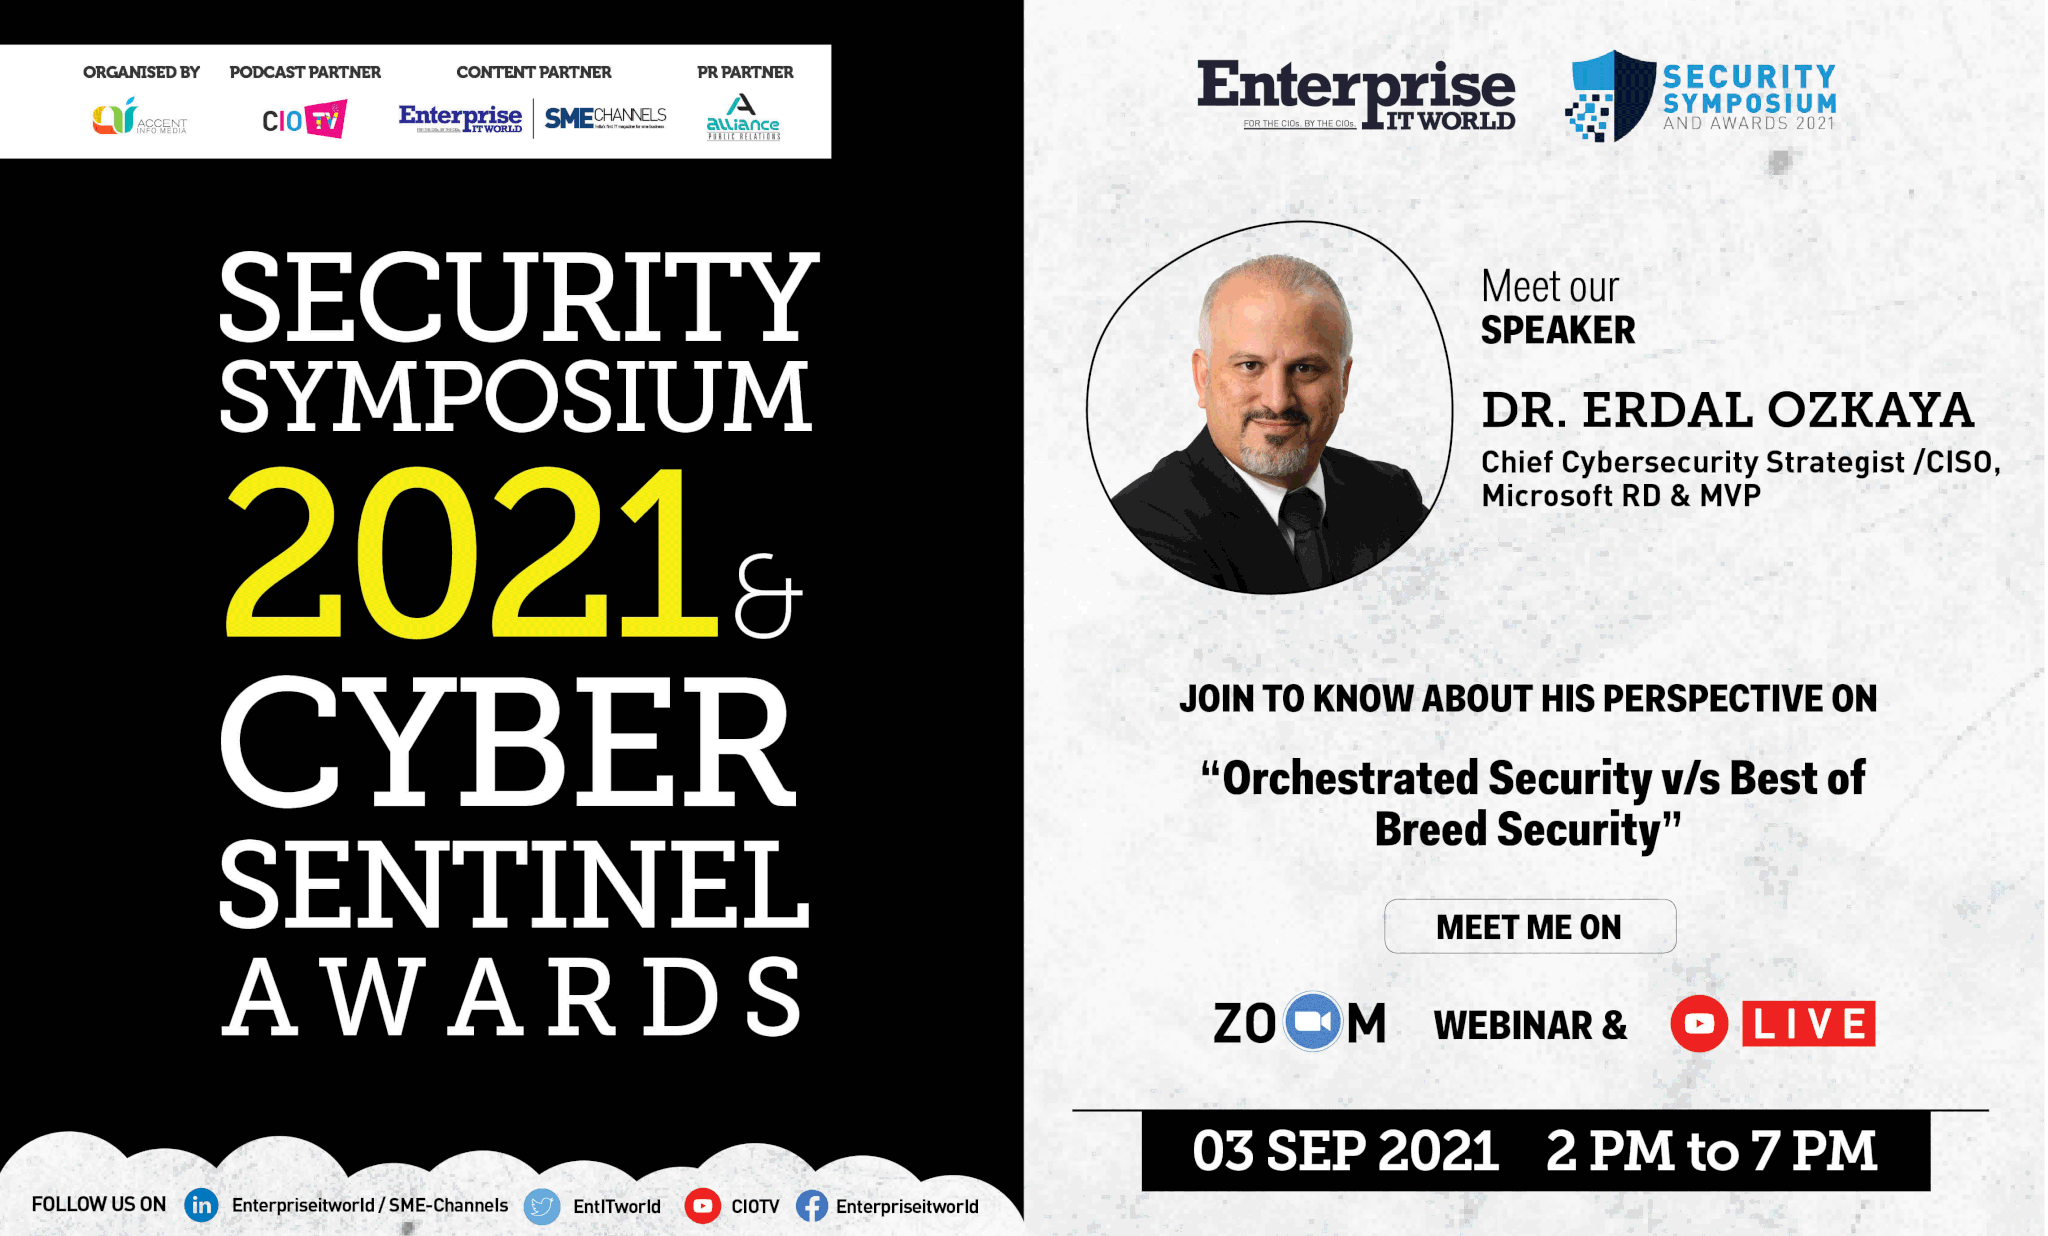 Enterprise IT World Security Symposium. Dr Erdal Ozkaya